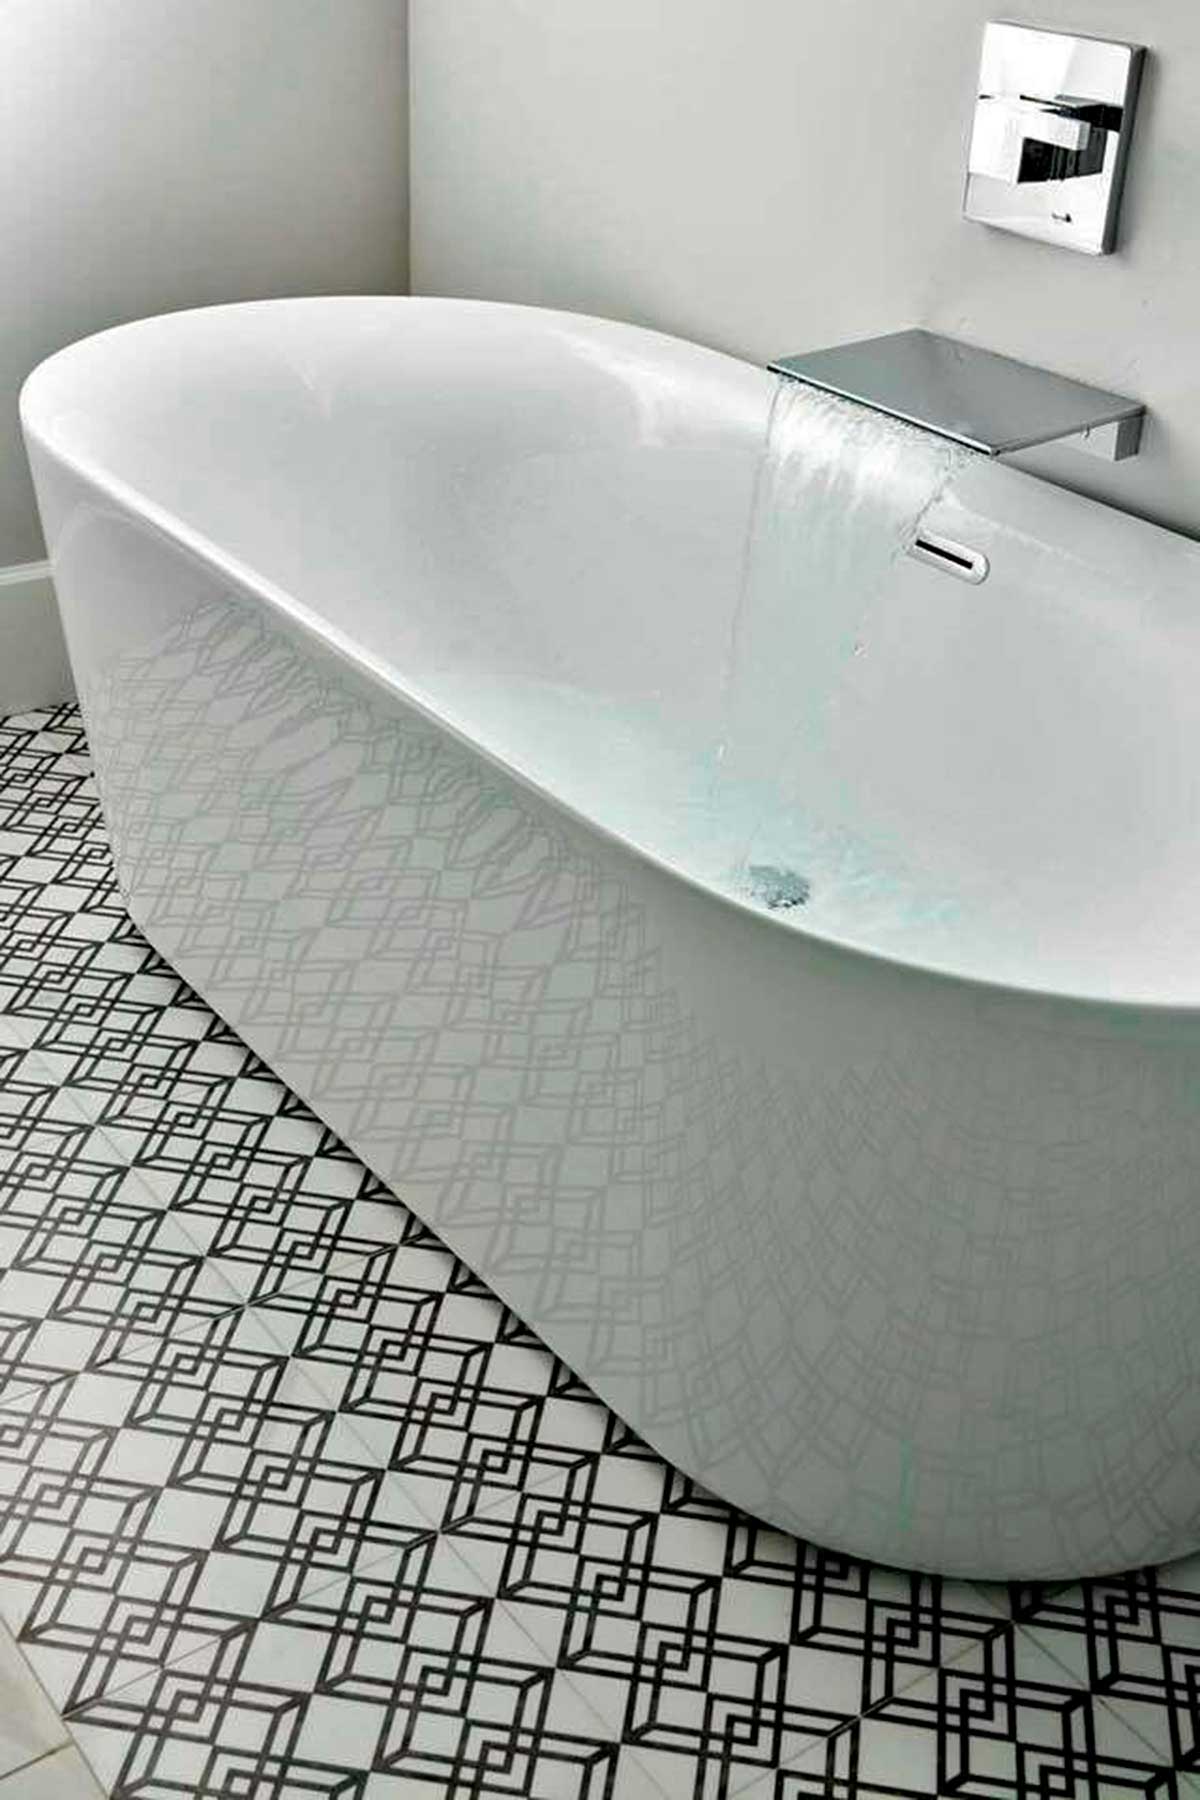 Elemental Charcoal on Thassos Bathroom Tile